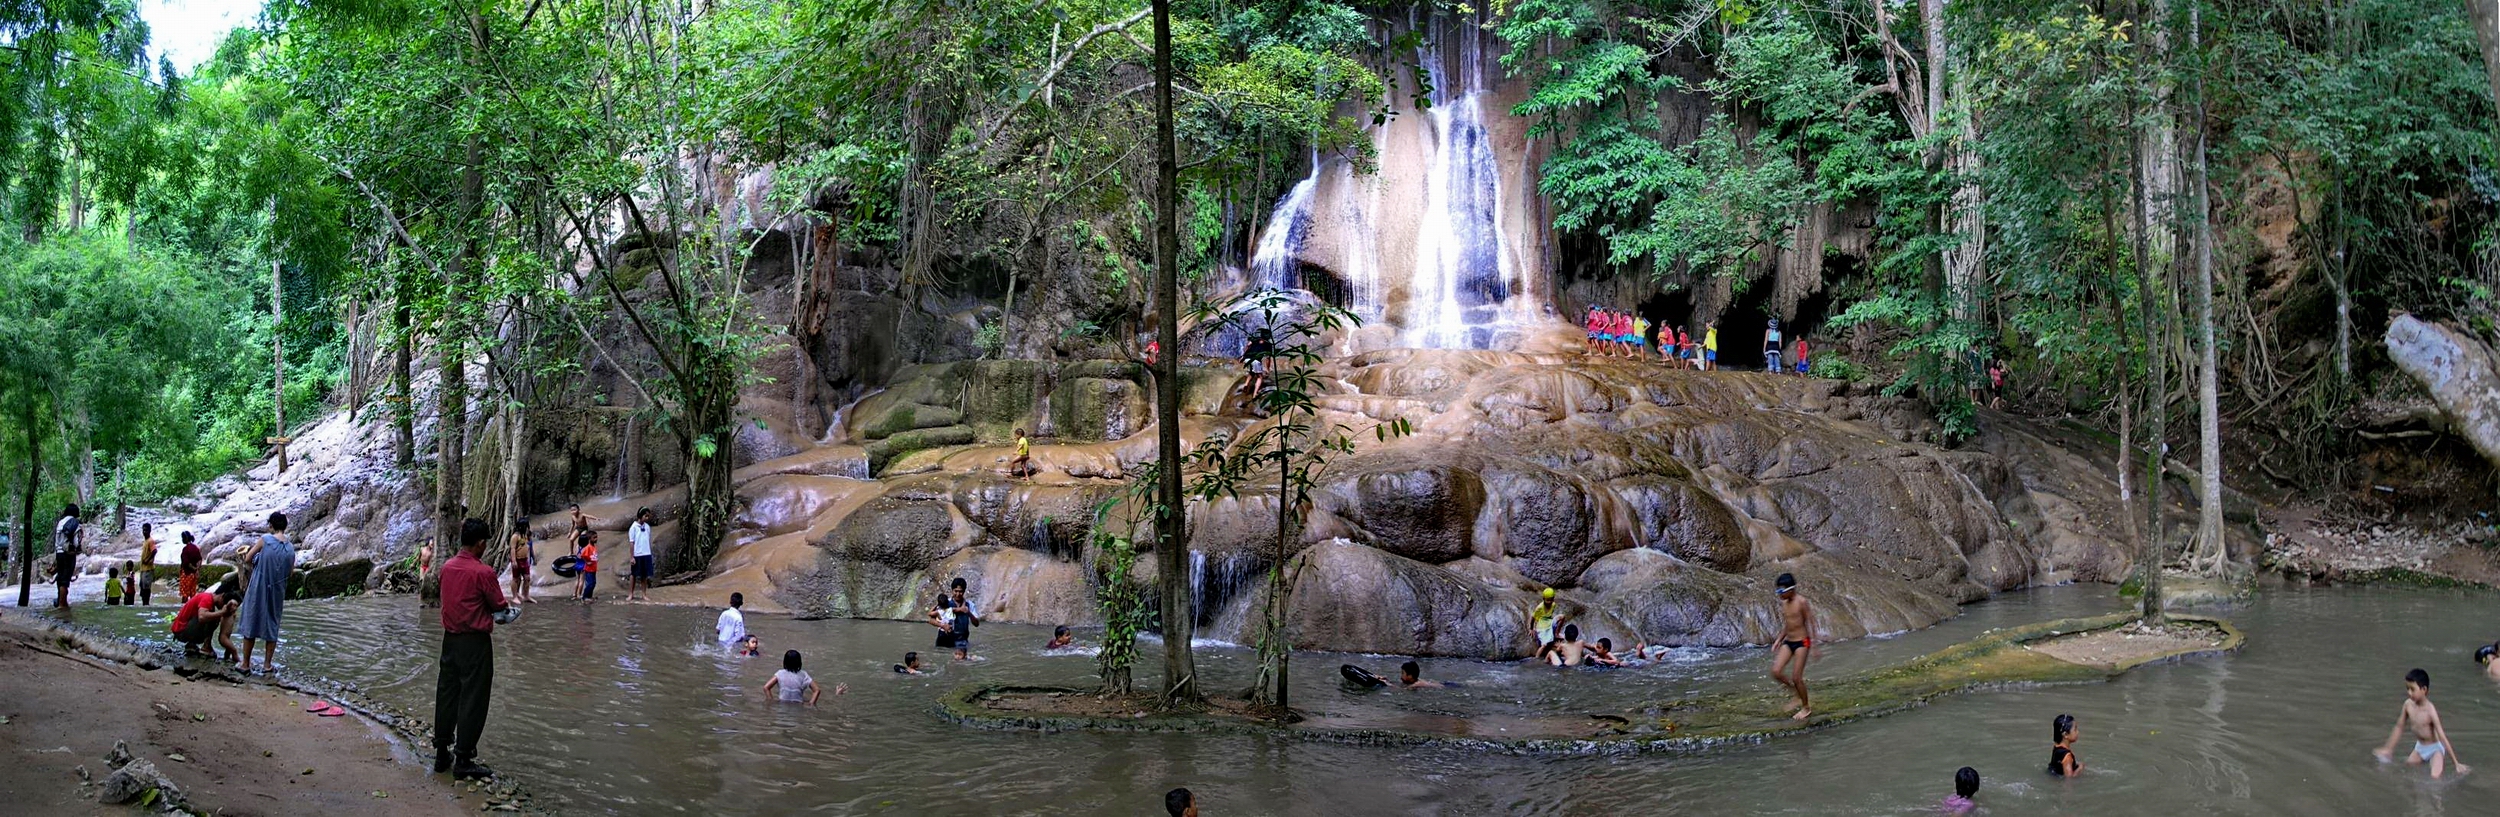 Saiyok Noi Waterfall